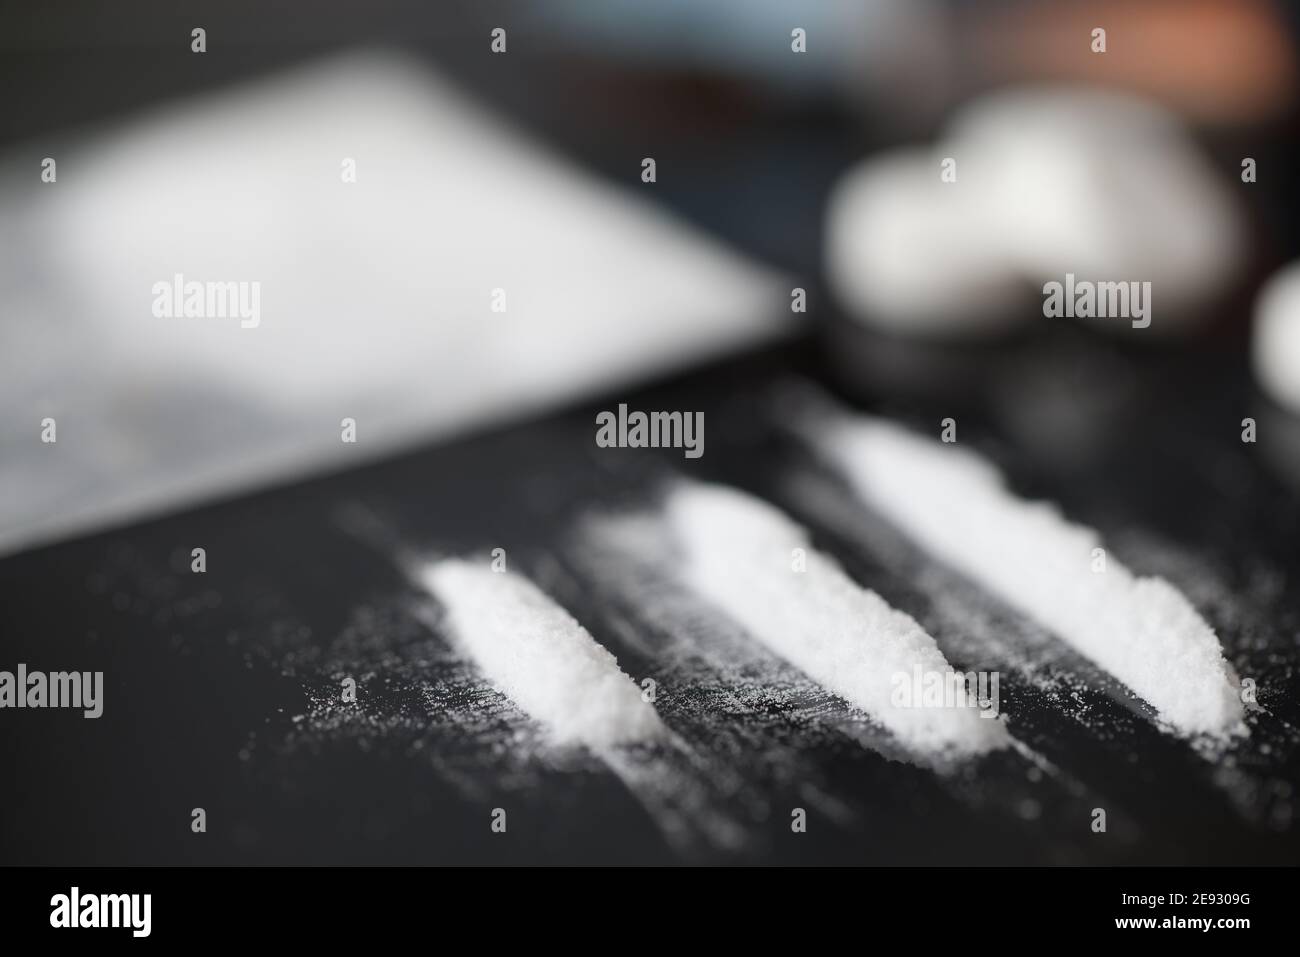 Closeup of white narcotic powder tracks on black background Stock Photo